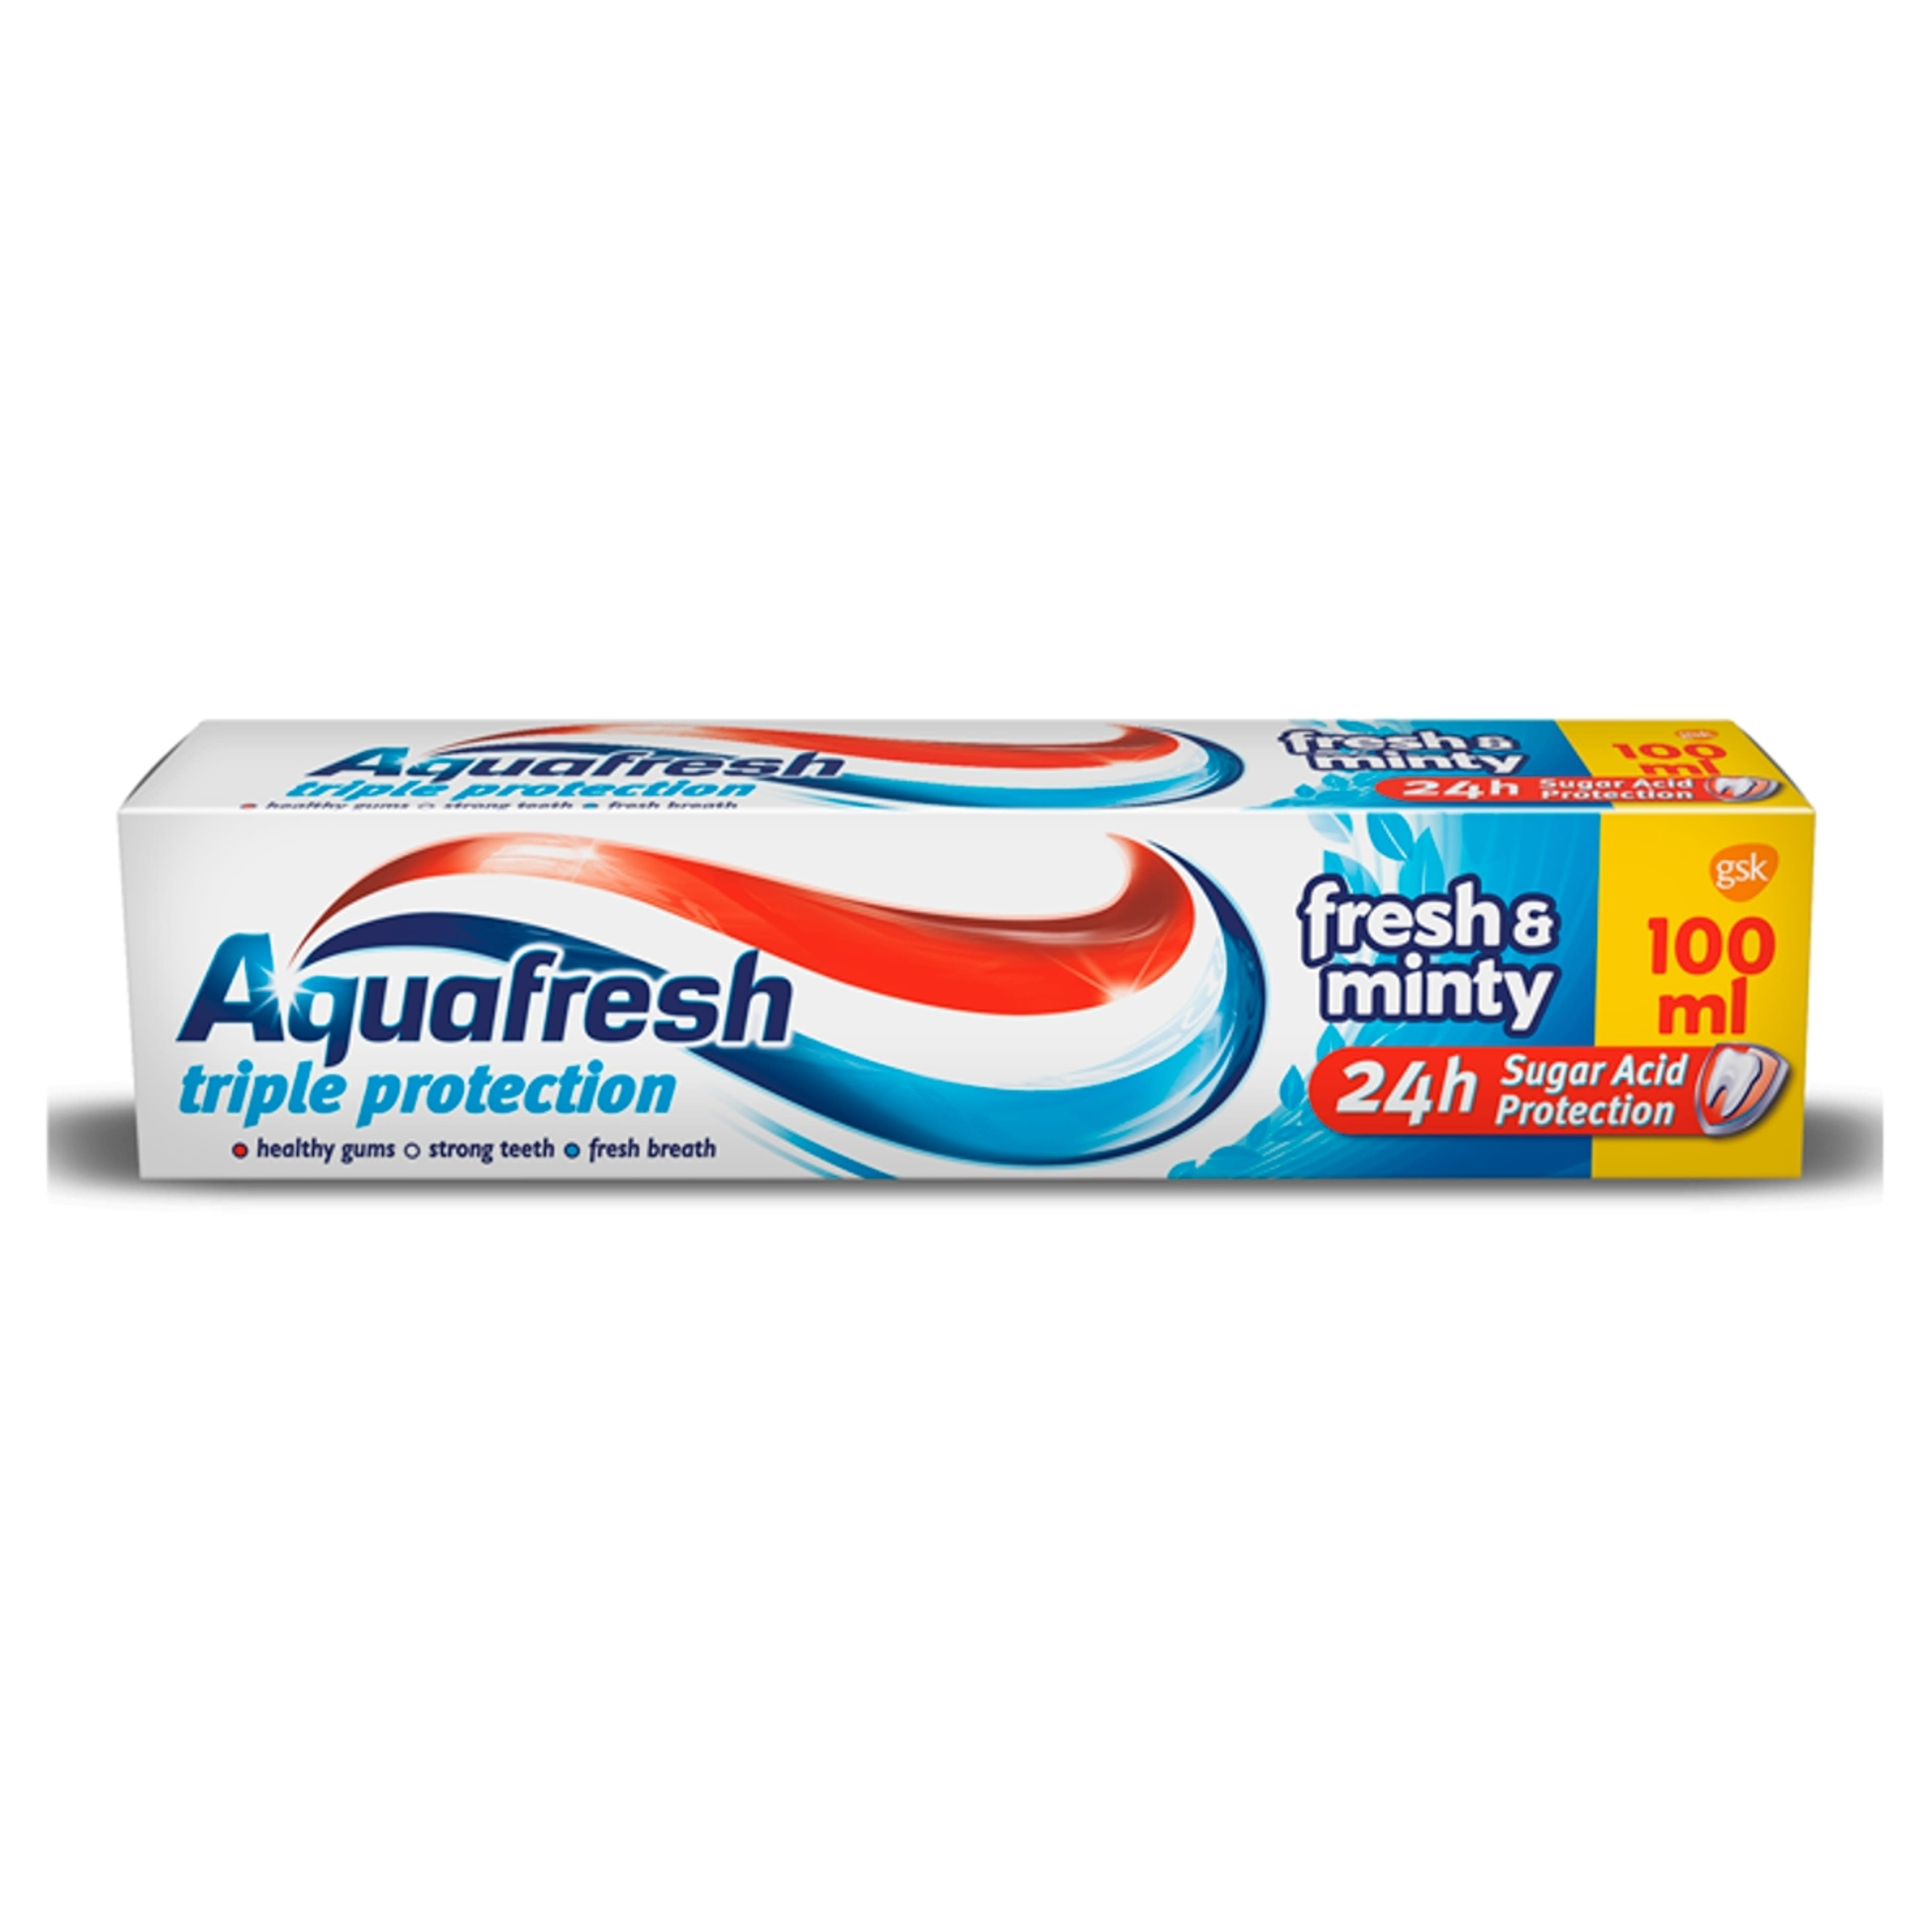 Aquafresh Fresh & Minty fogkrém - 100 ml-1